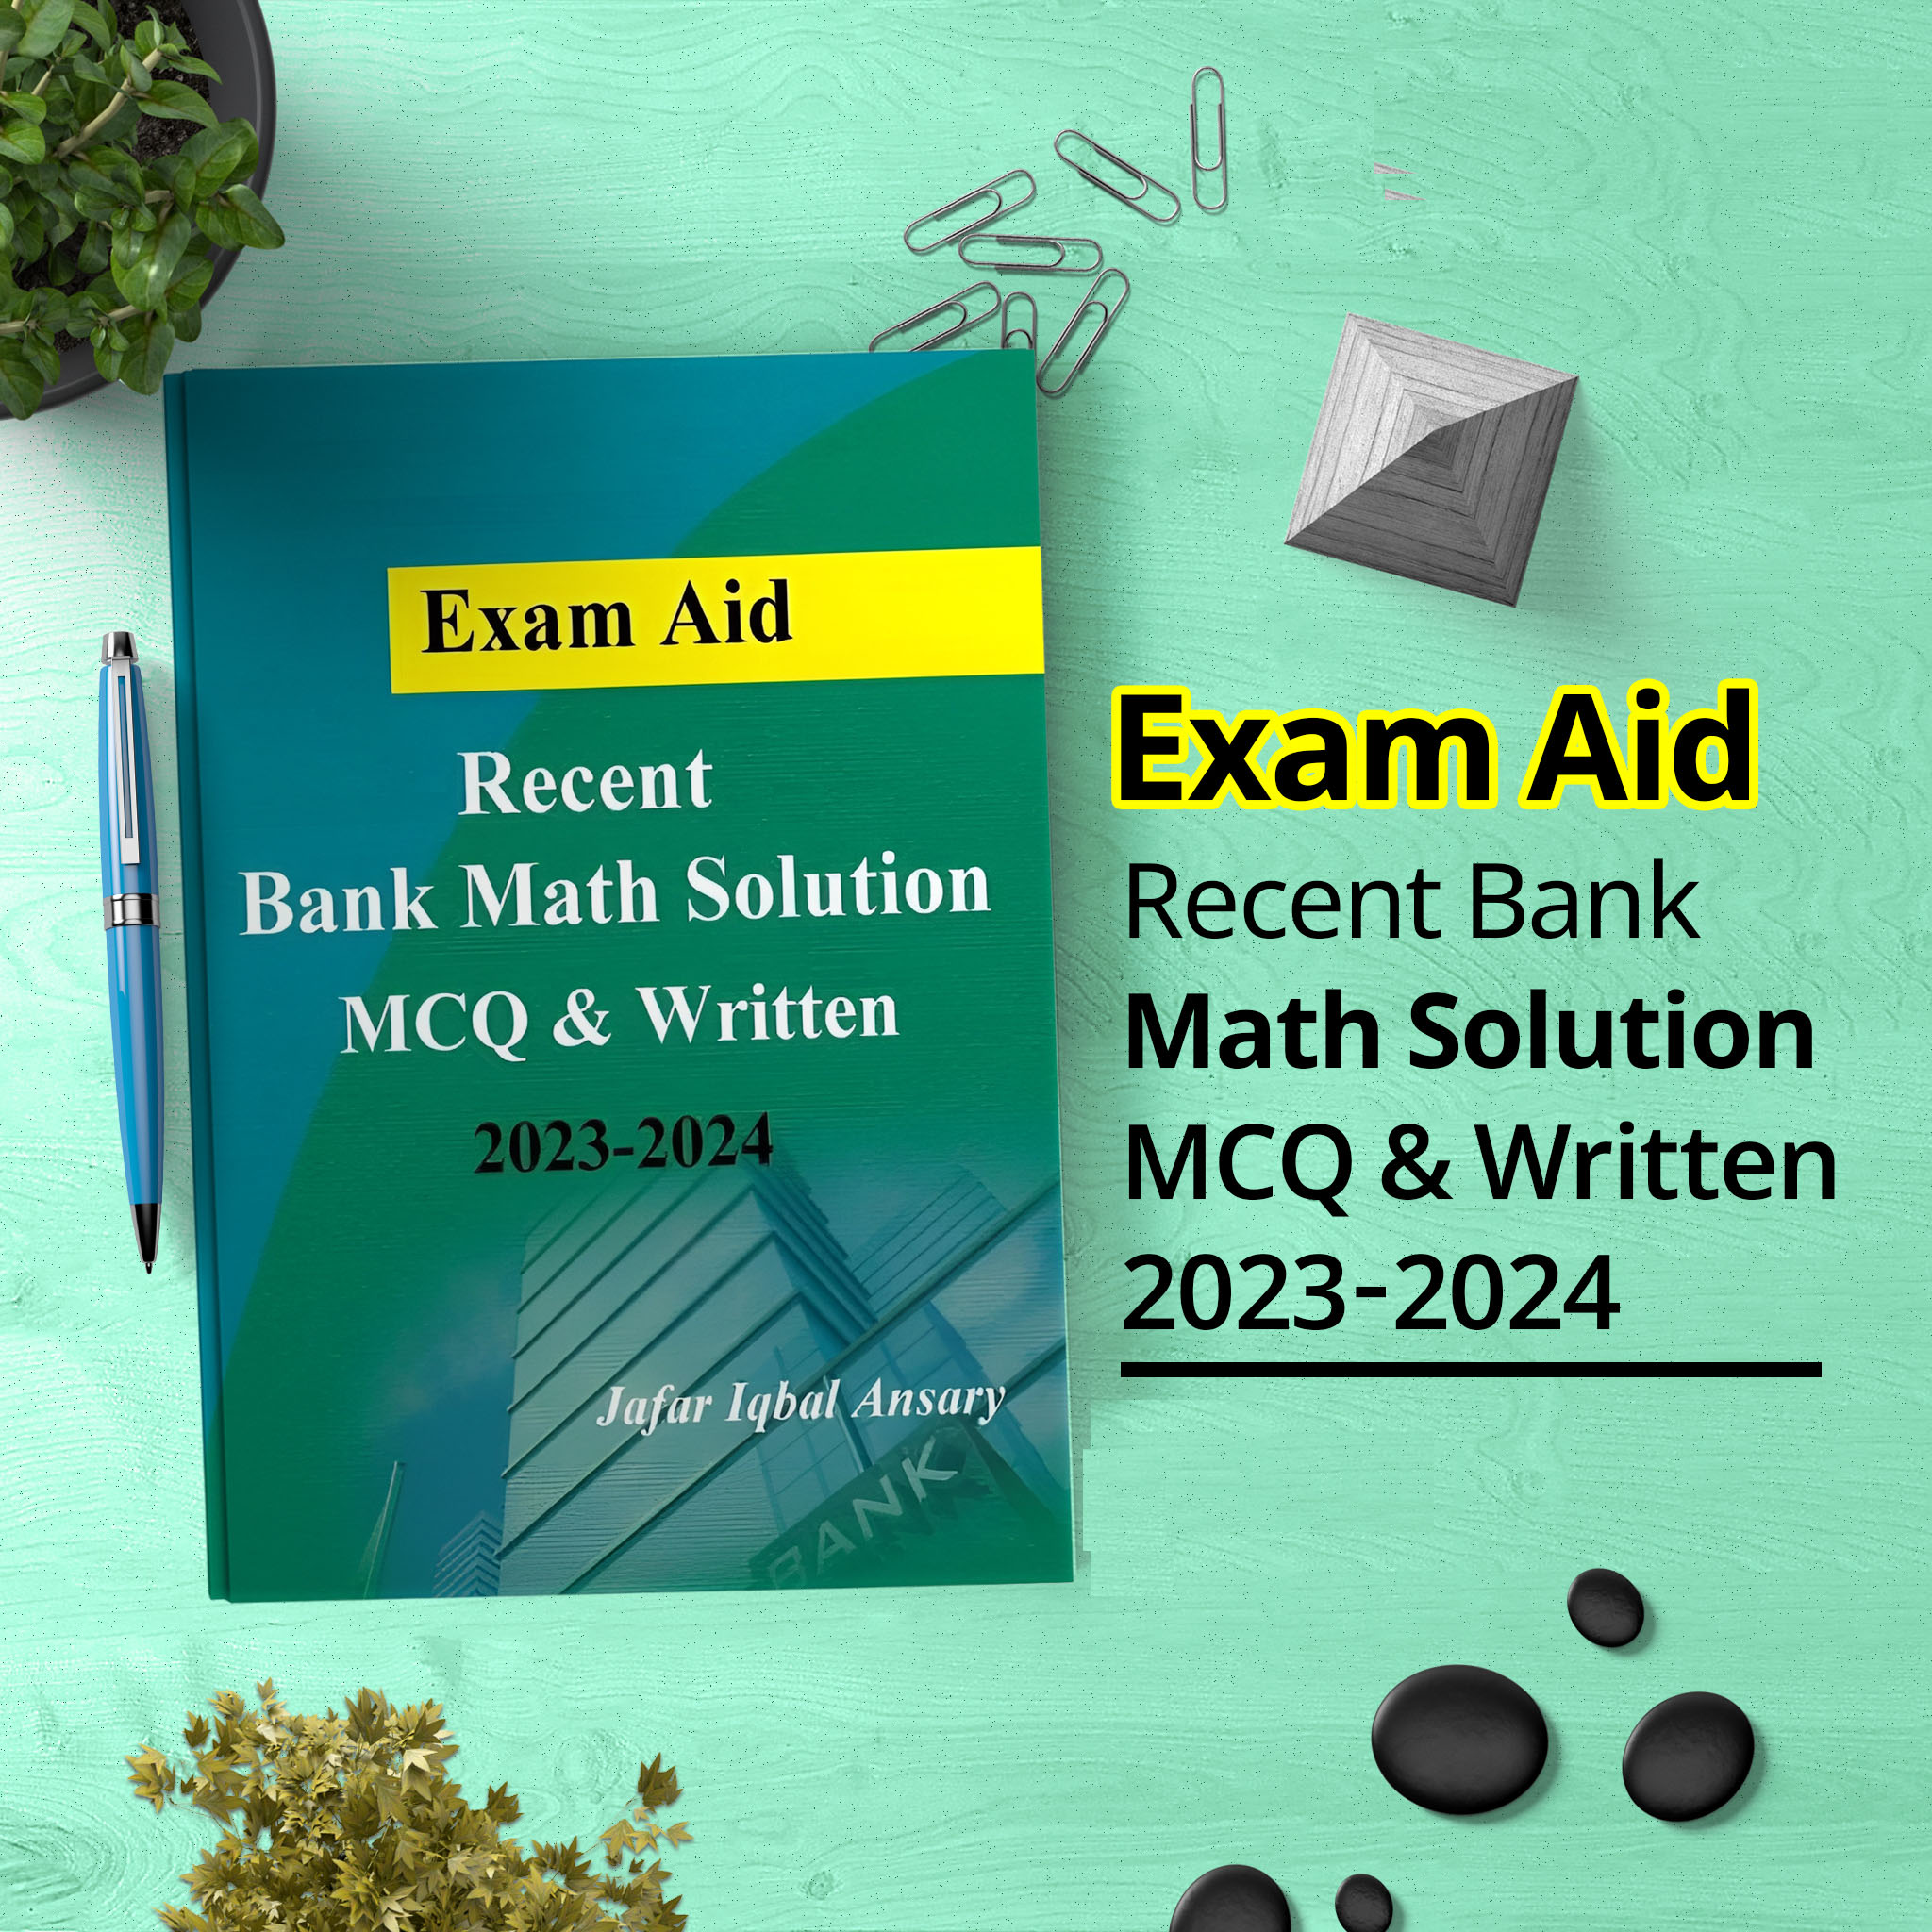 Exam Aid Recent Bank Math Solution by Jafar Iqbal Ansary (Mcq & Written) 2023-2024